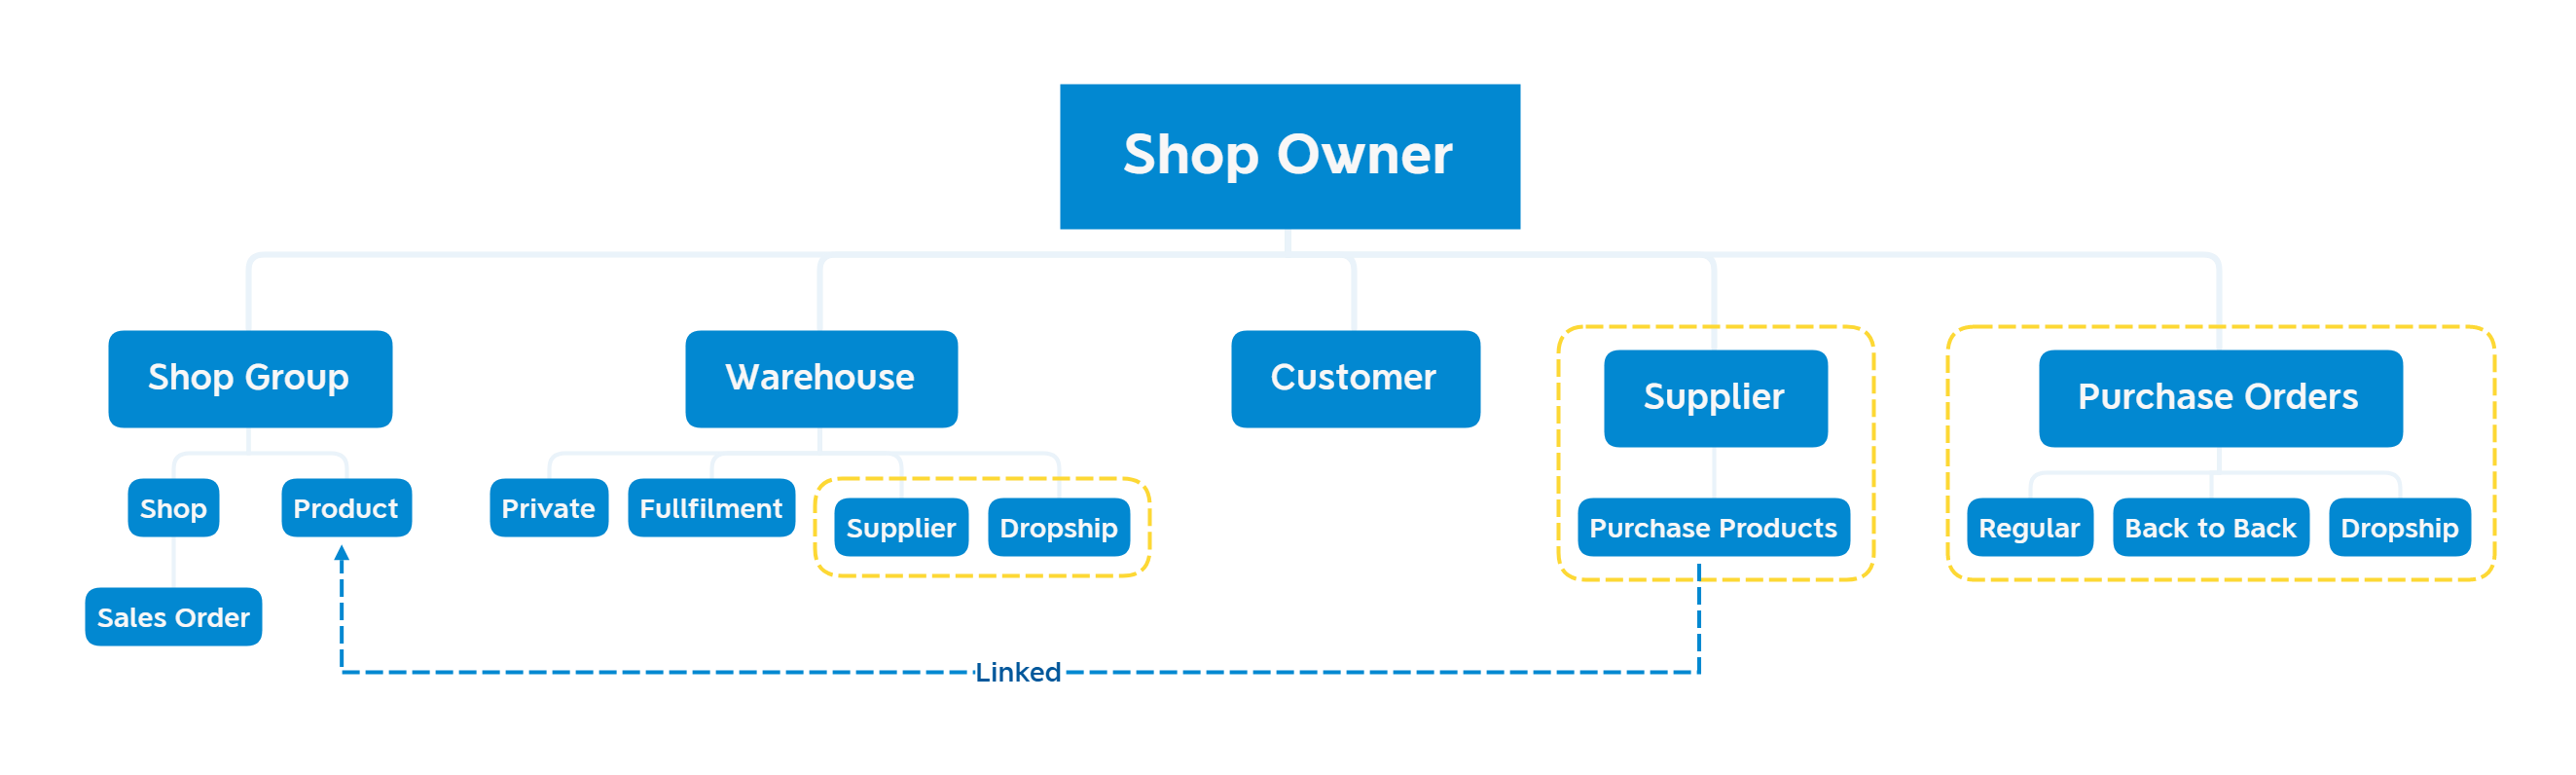 ShopCtrl Architecture 3.0